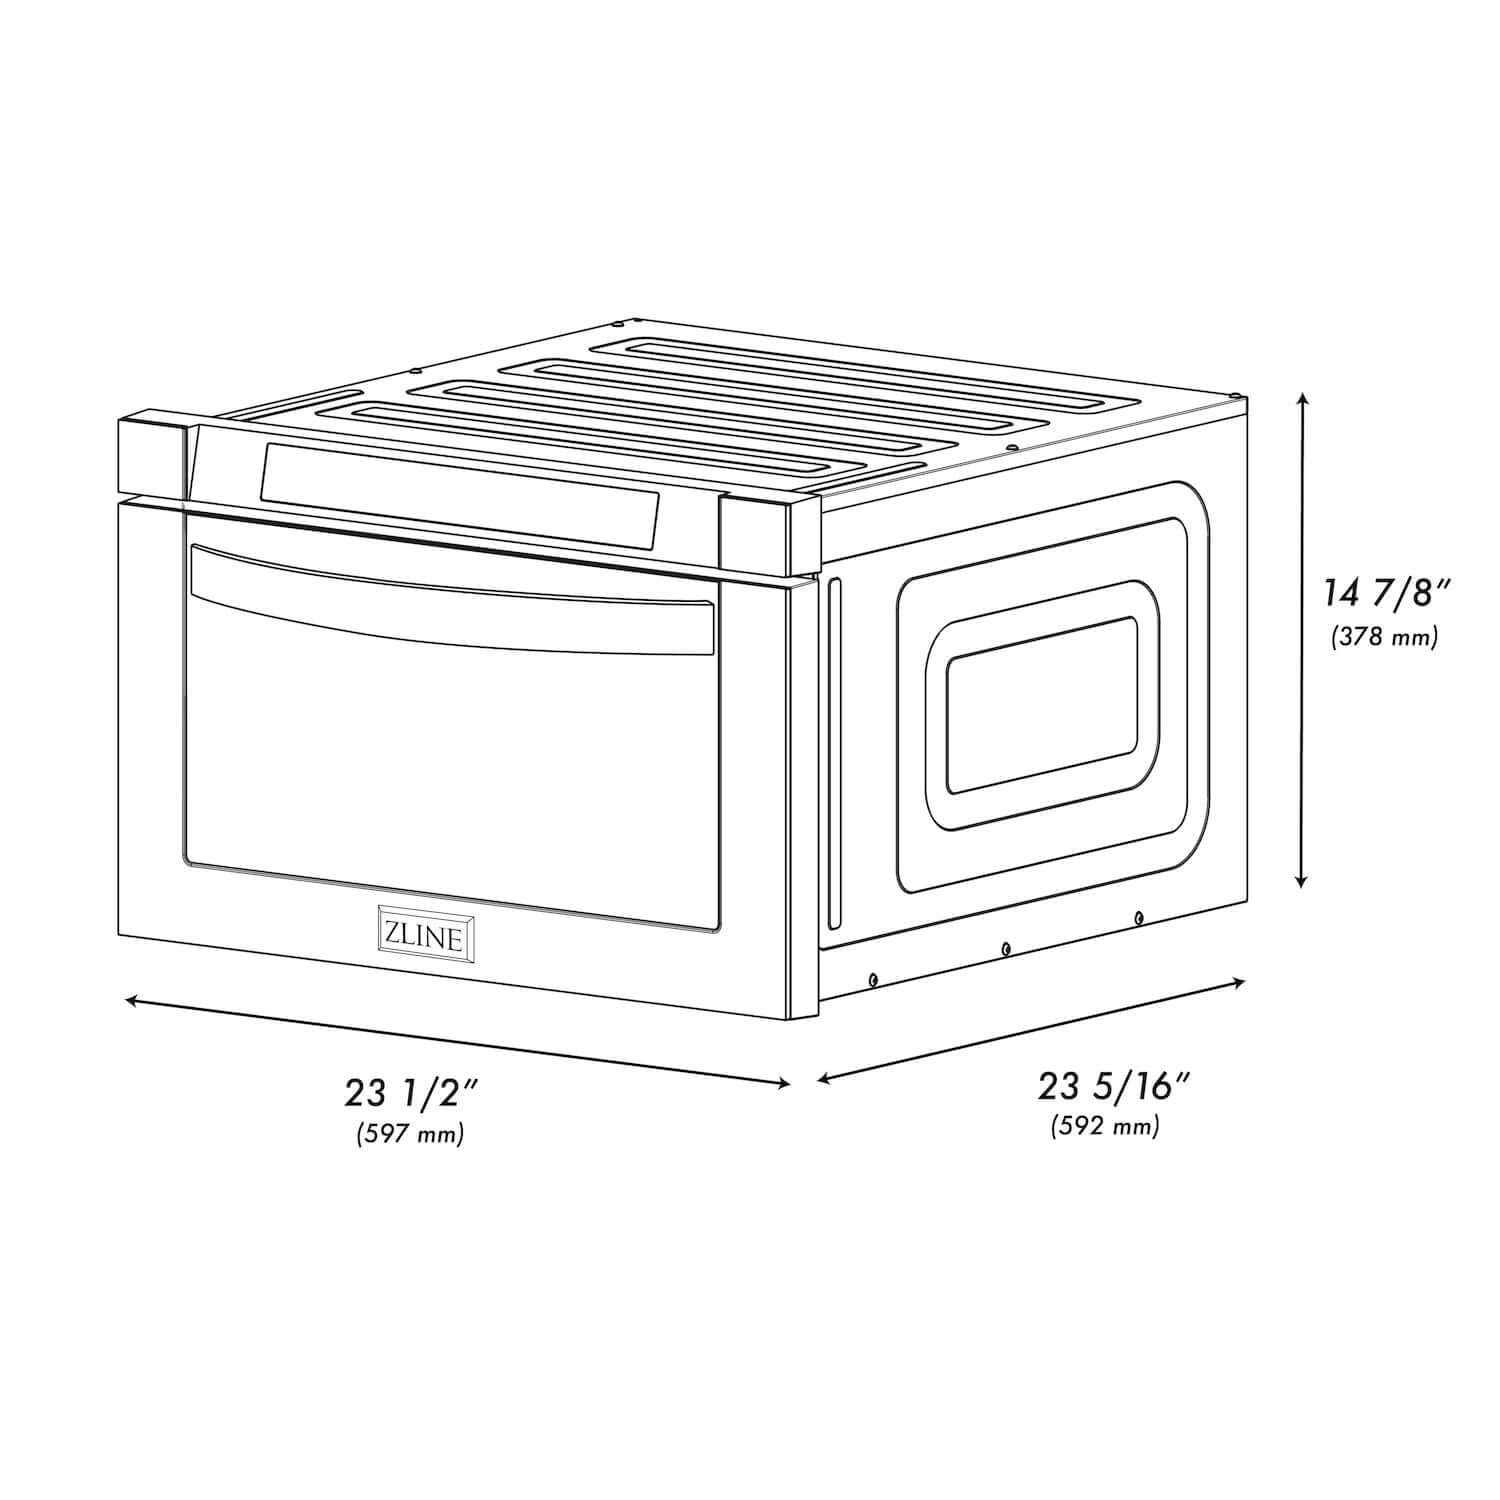 ZLINE 24" Microwave Drawer (MWD-1) dimensional diagram.